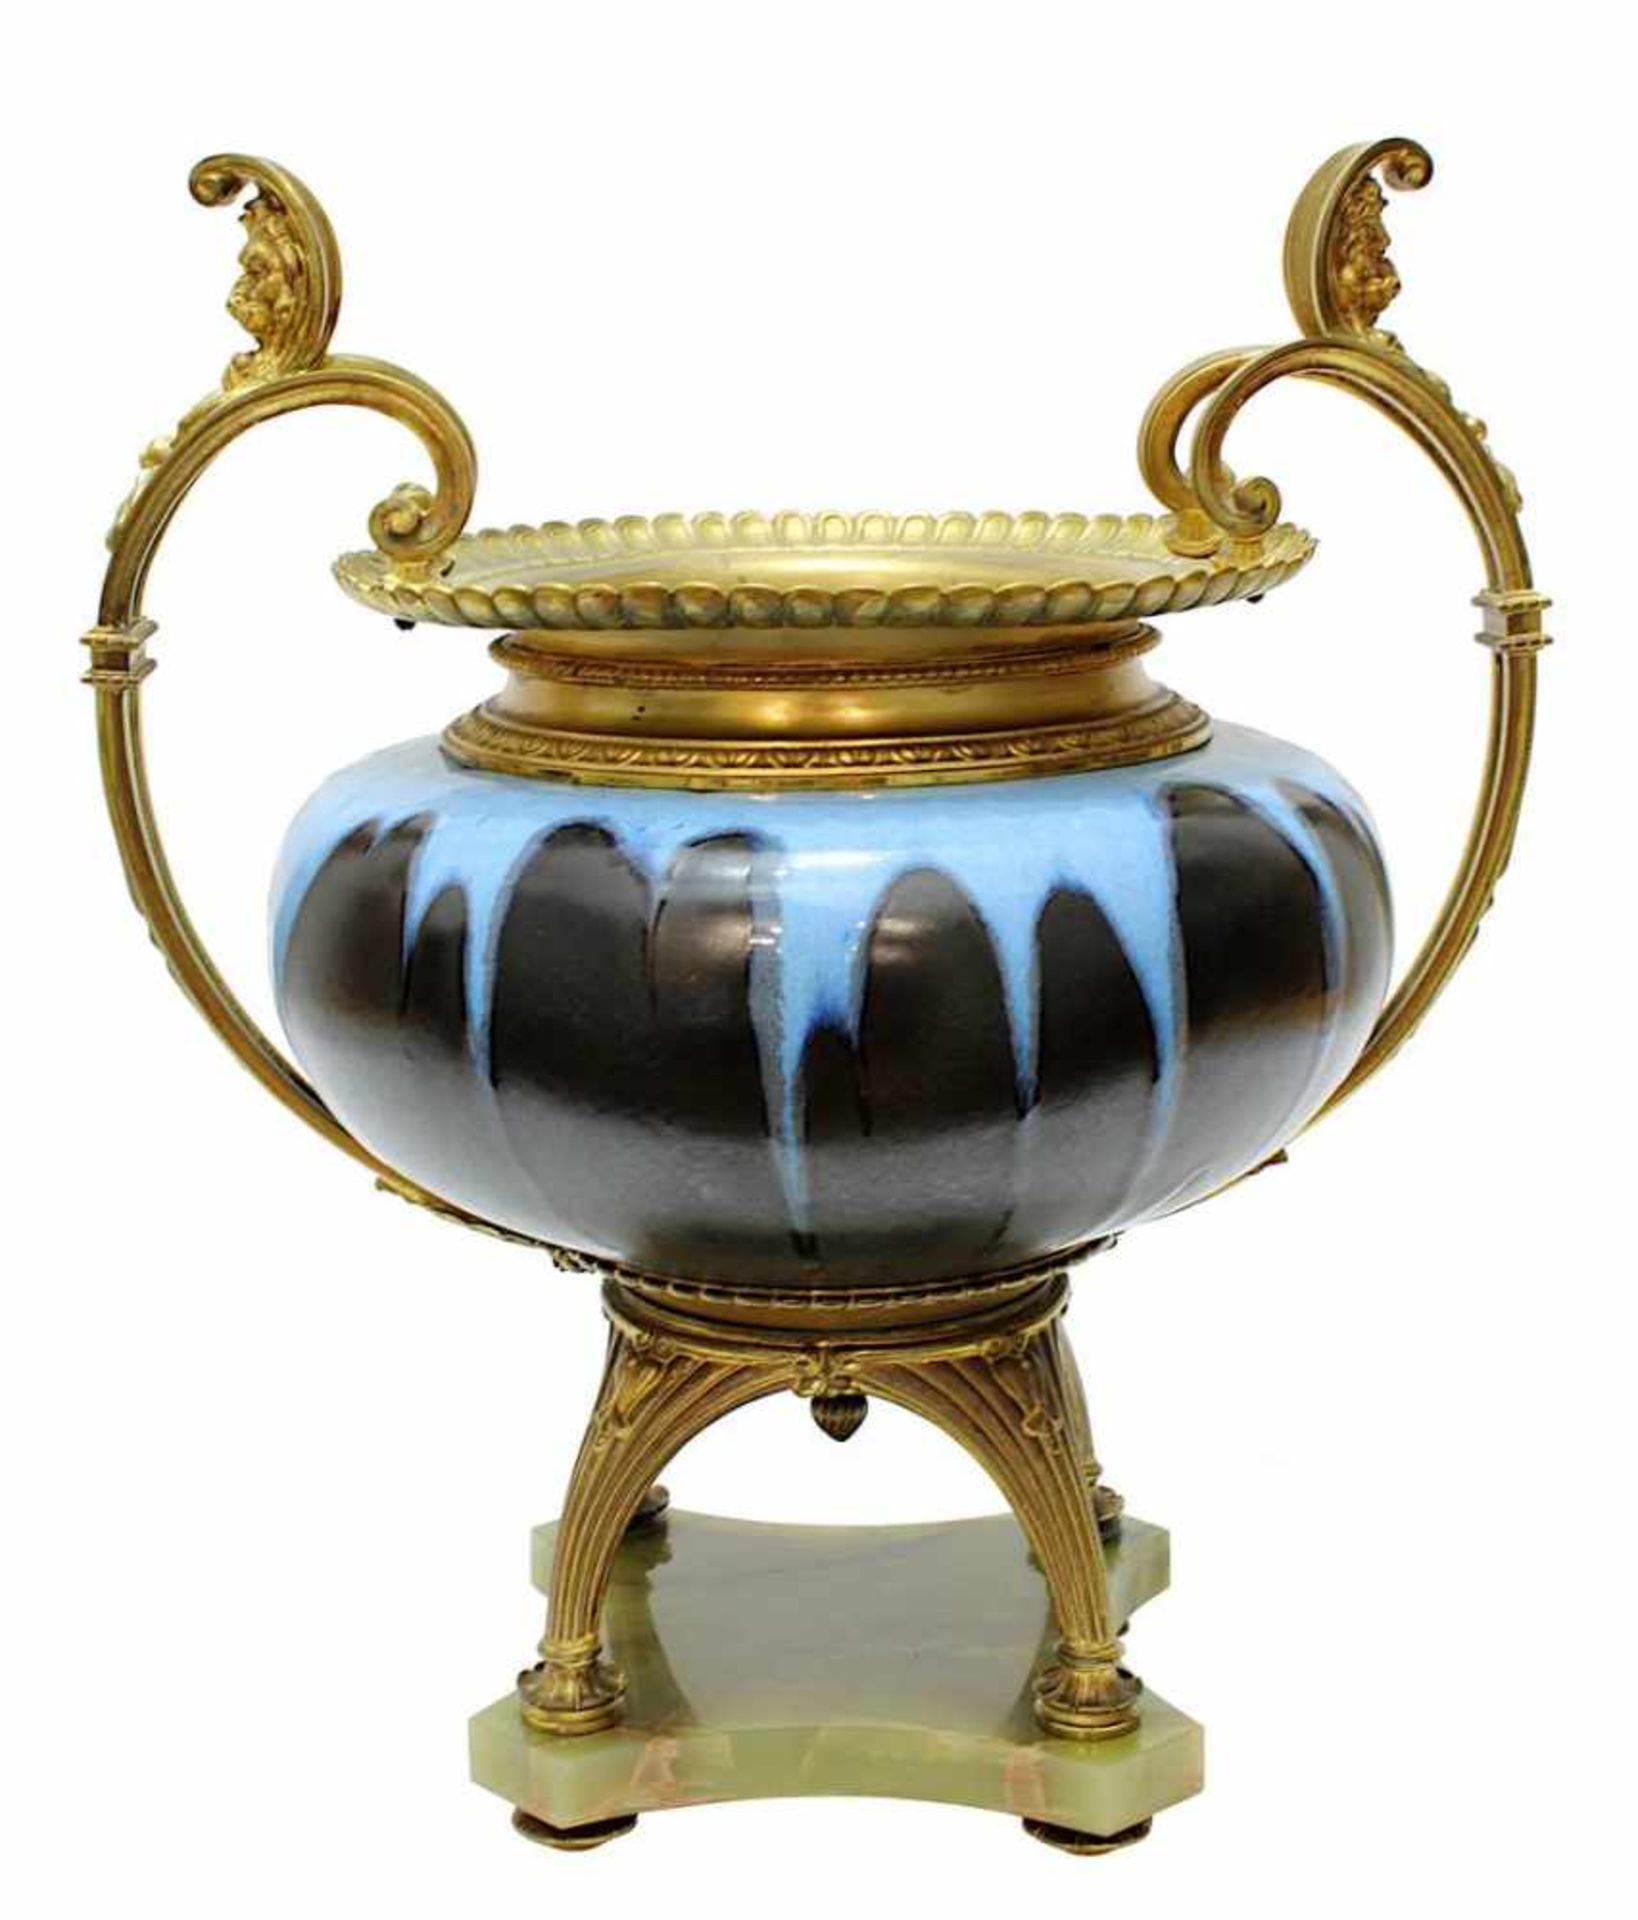 Historismus Keramik-Cachepot mit vergoldeter Bronzemontur, um 1880, gebauchter Keramikkorpus mit